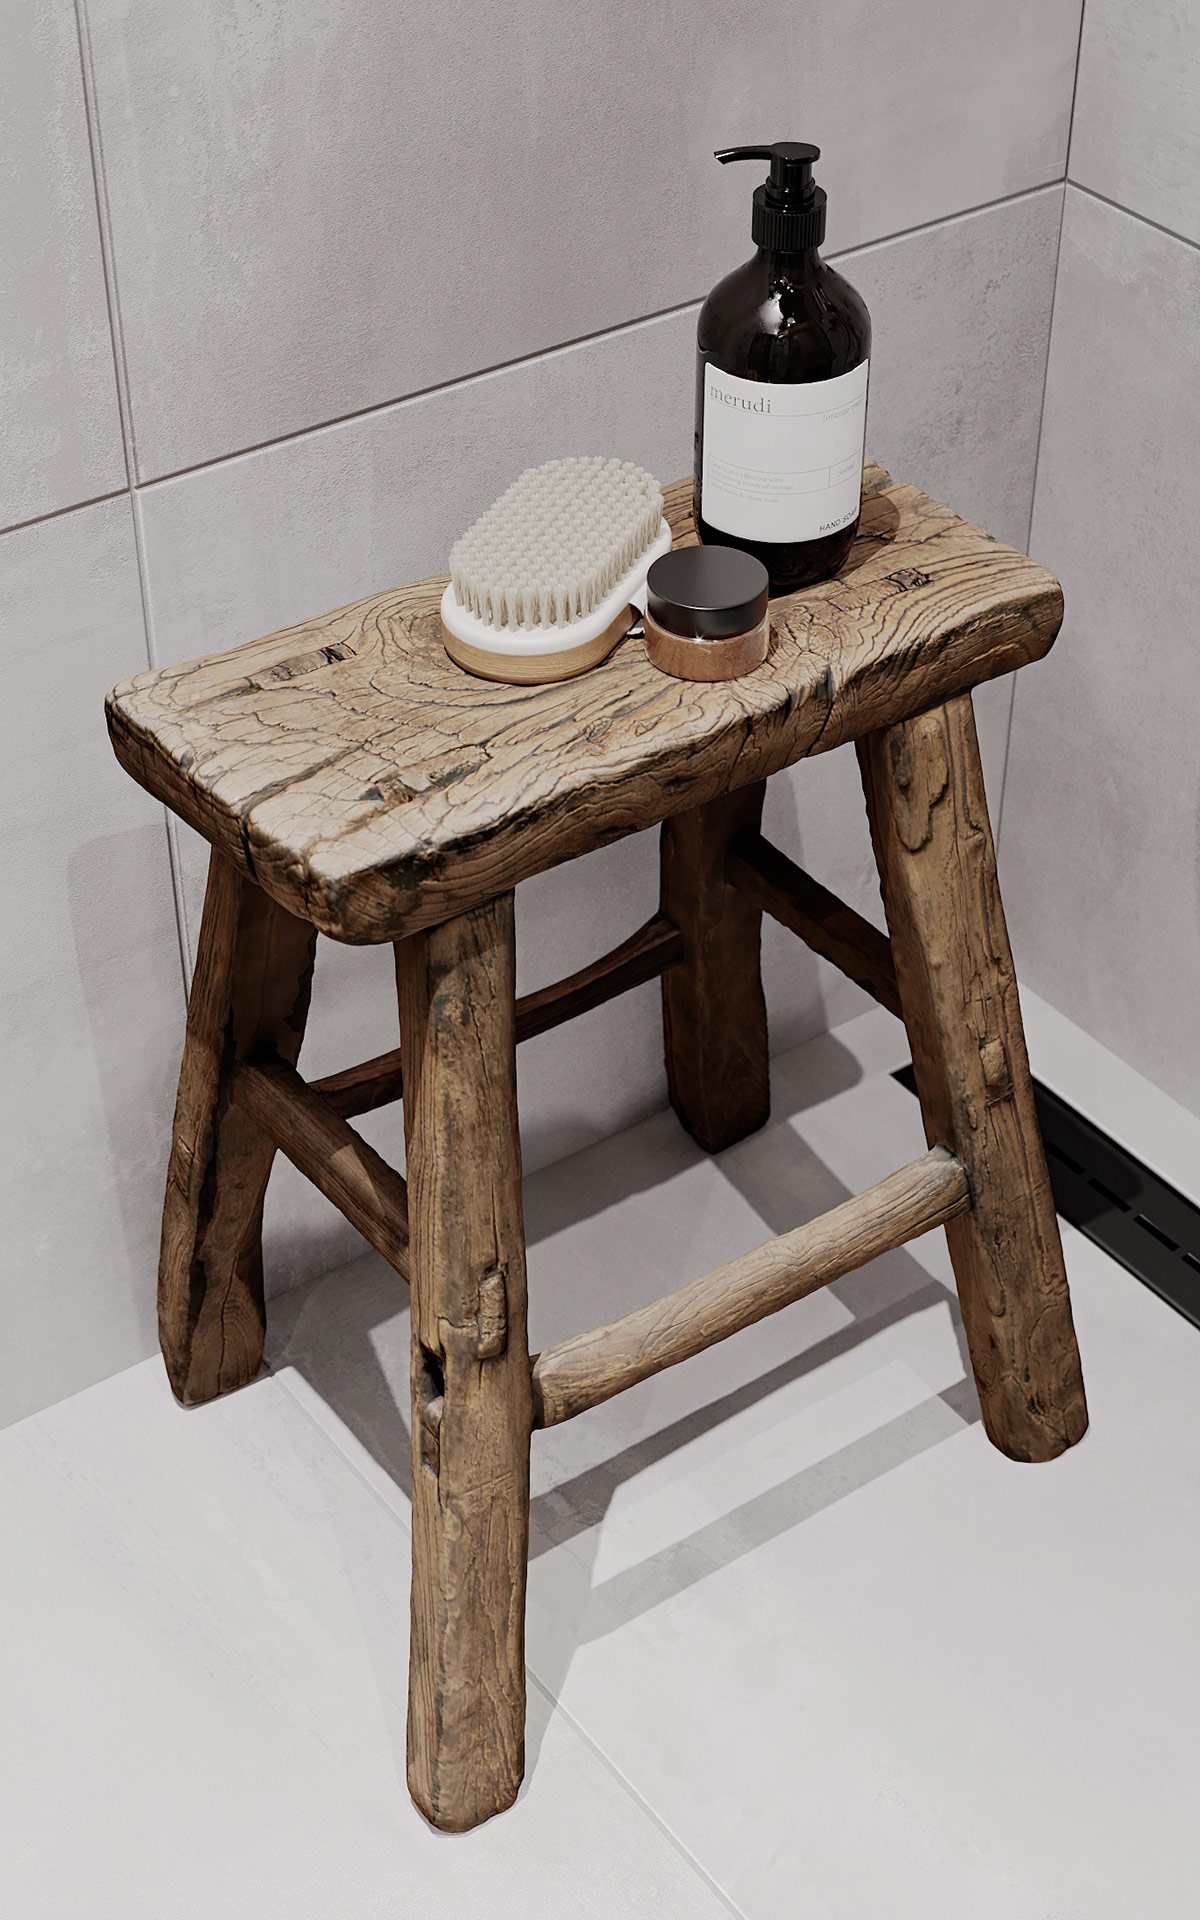 wooden-bathroom-stool.jpg